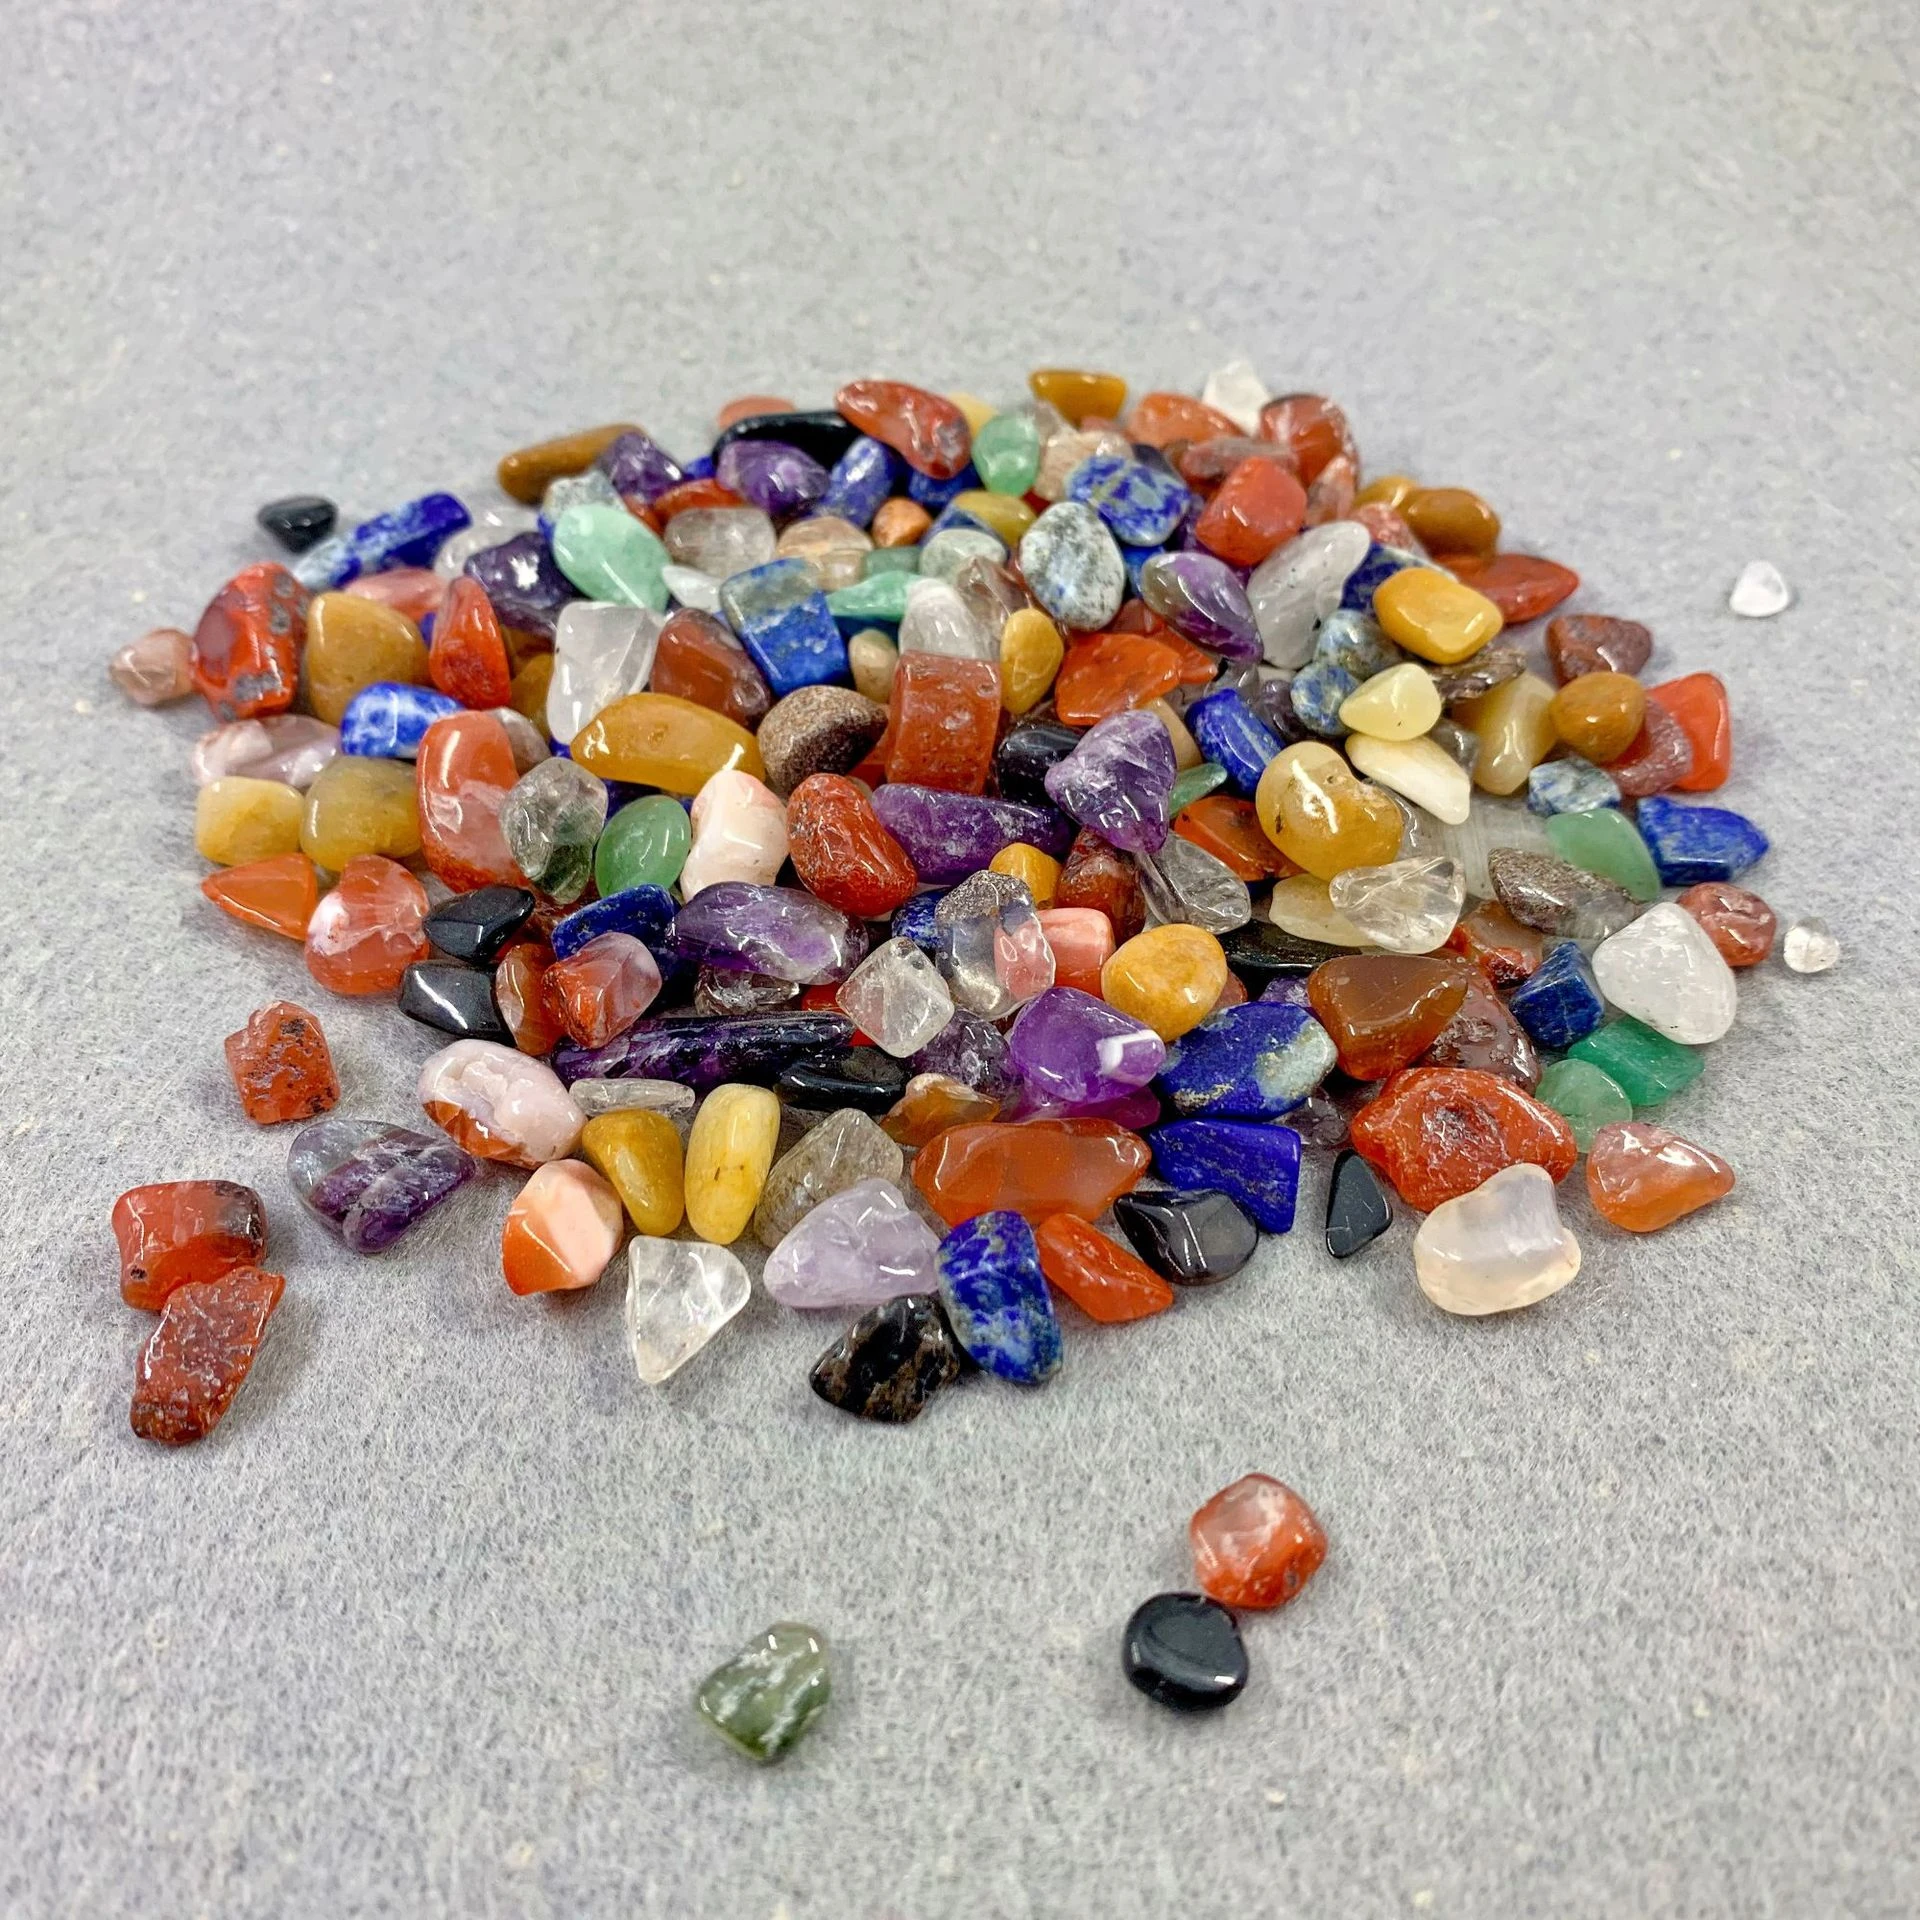 Wholesale natural colorful mixed stone quartz tumbled crystal quartz crystal prices